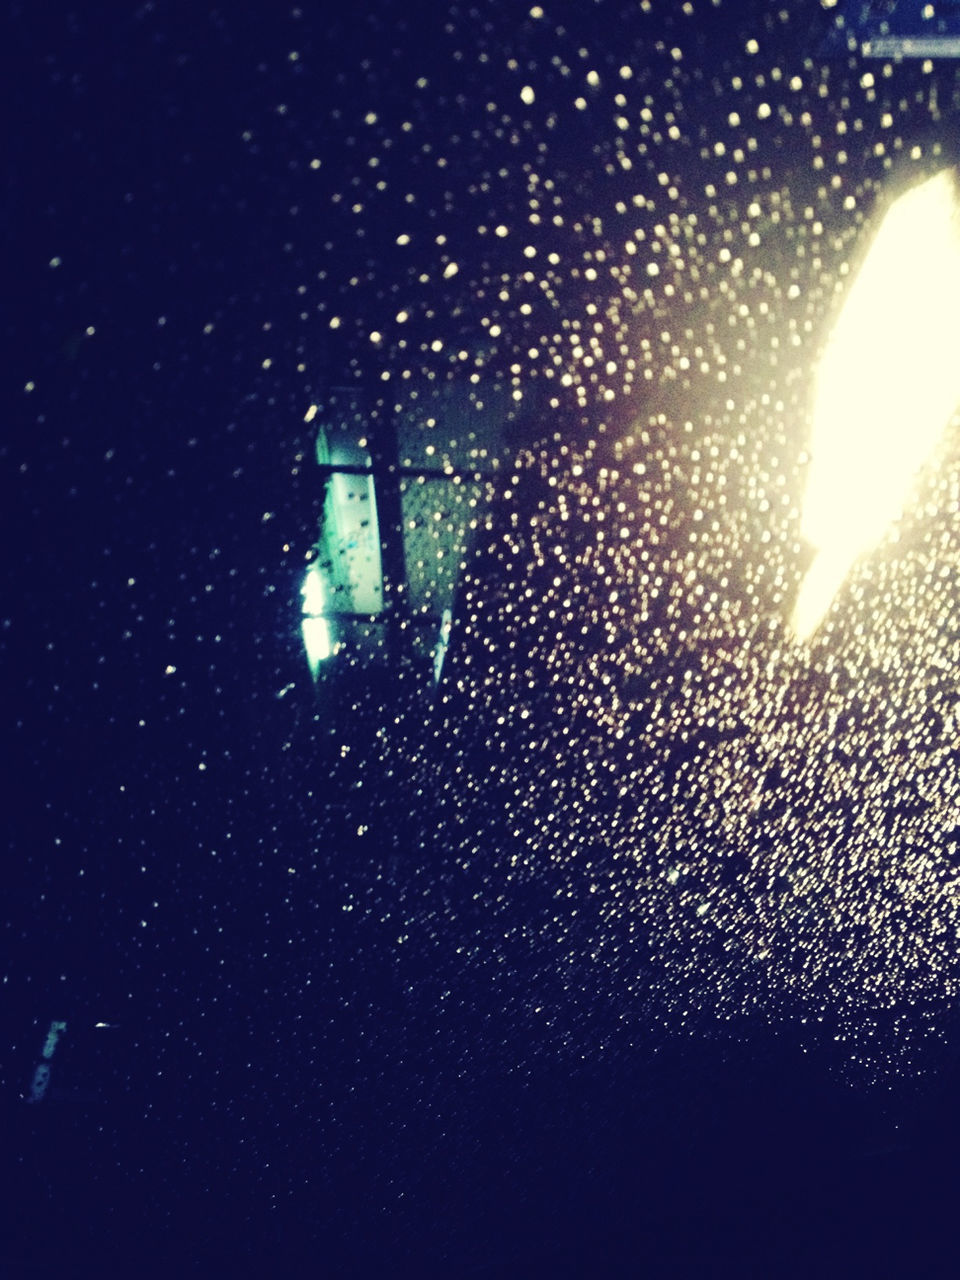 Illuminated street light seen through wet glass